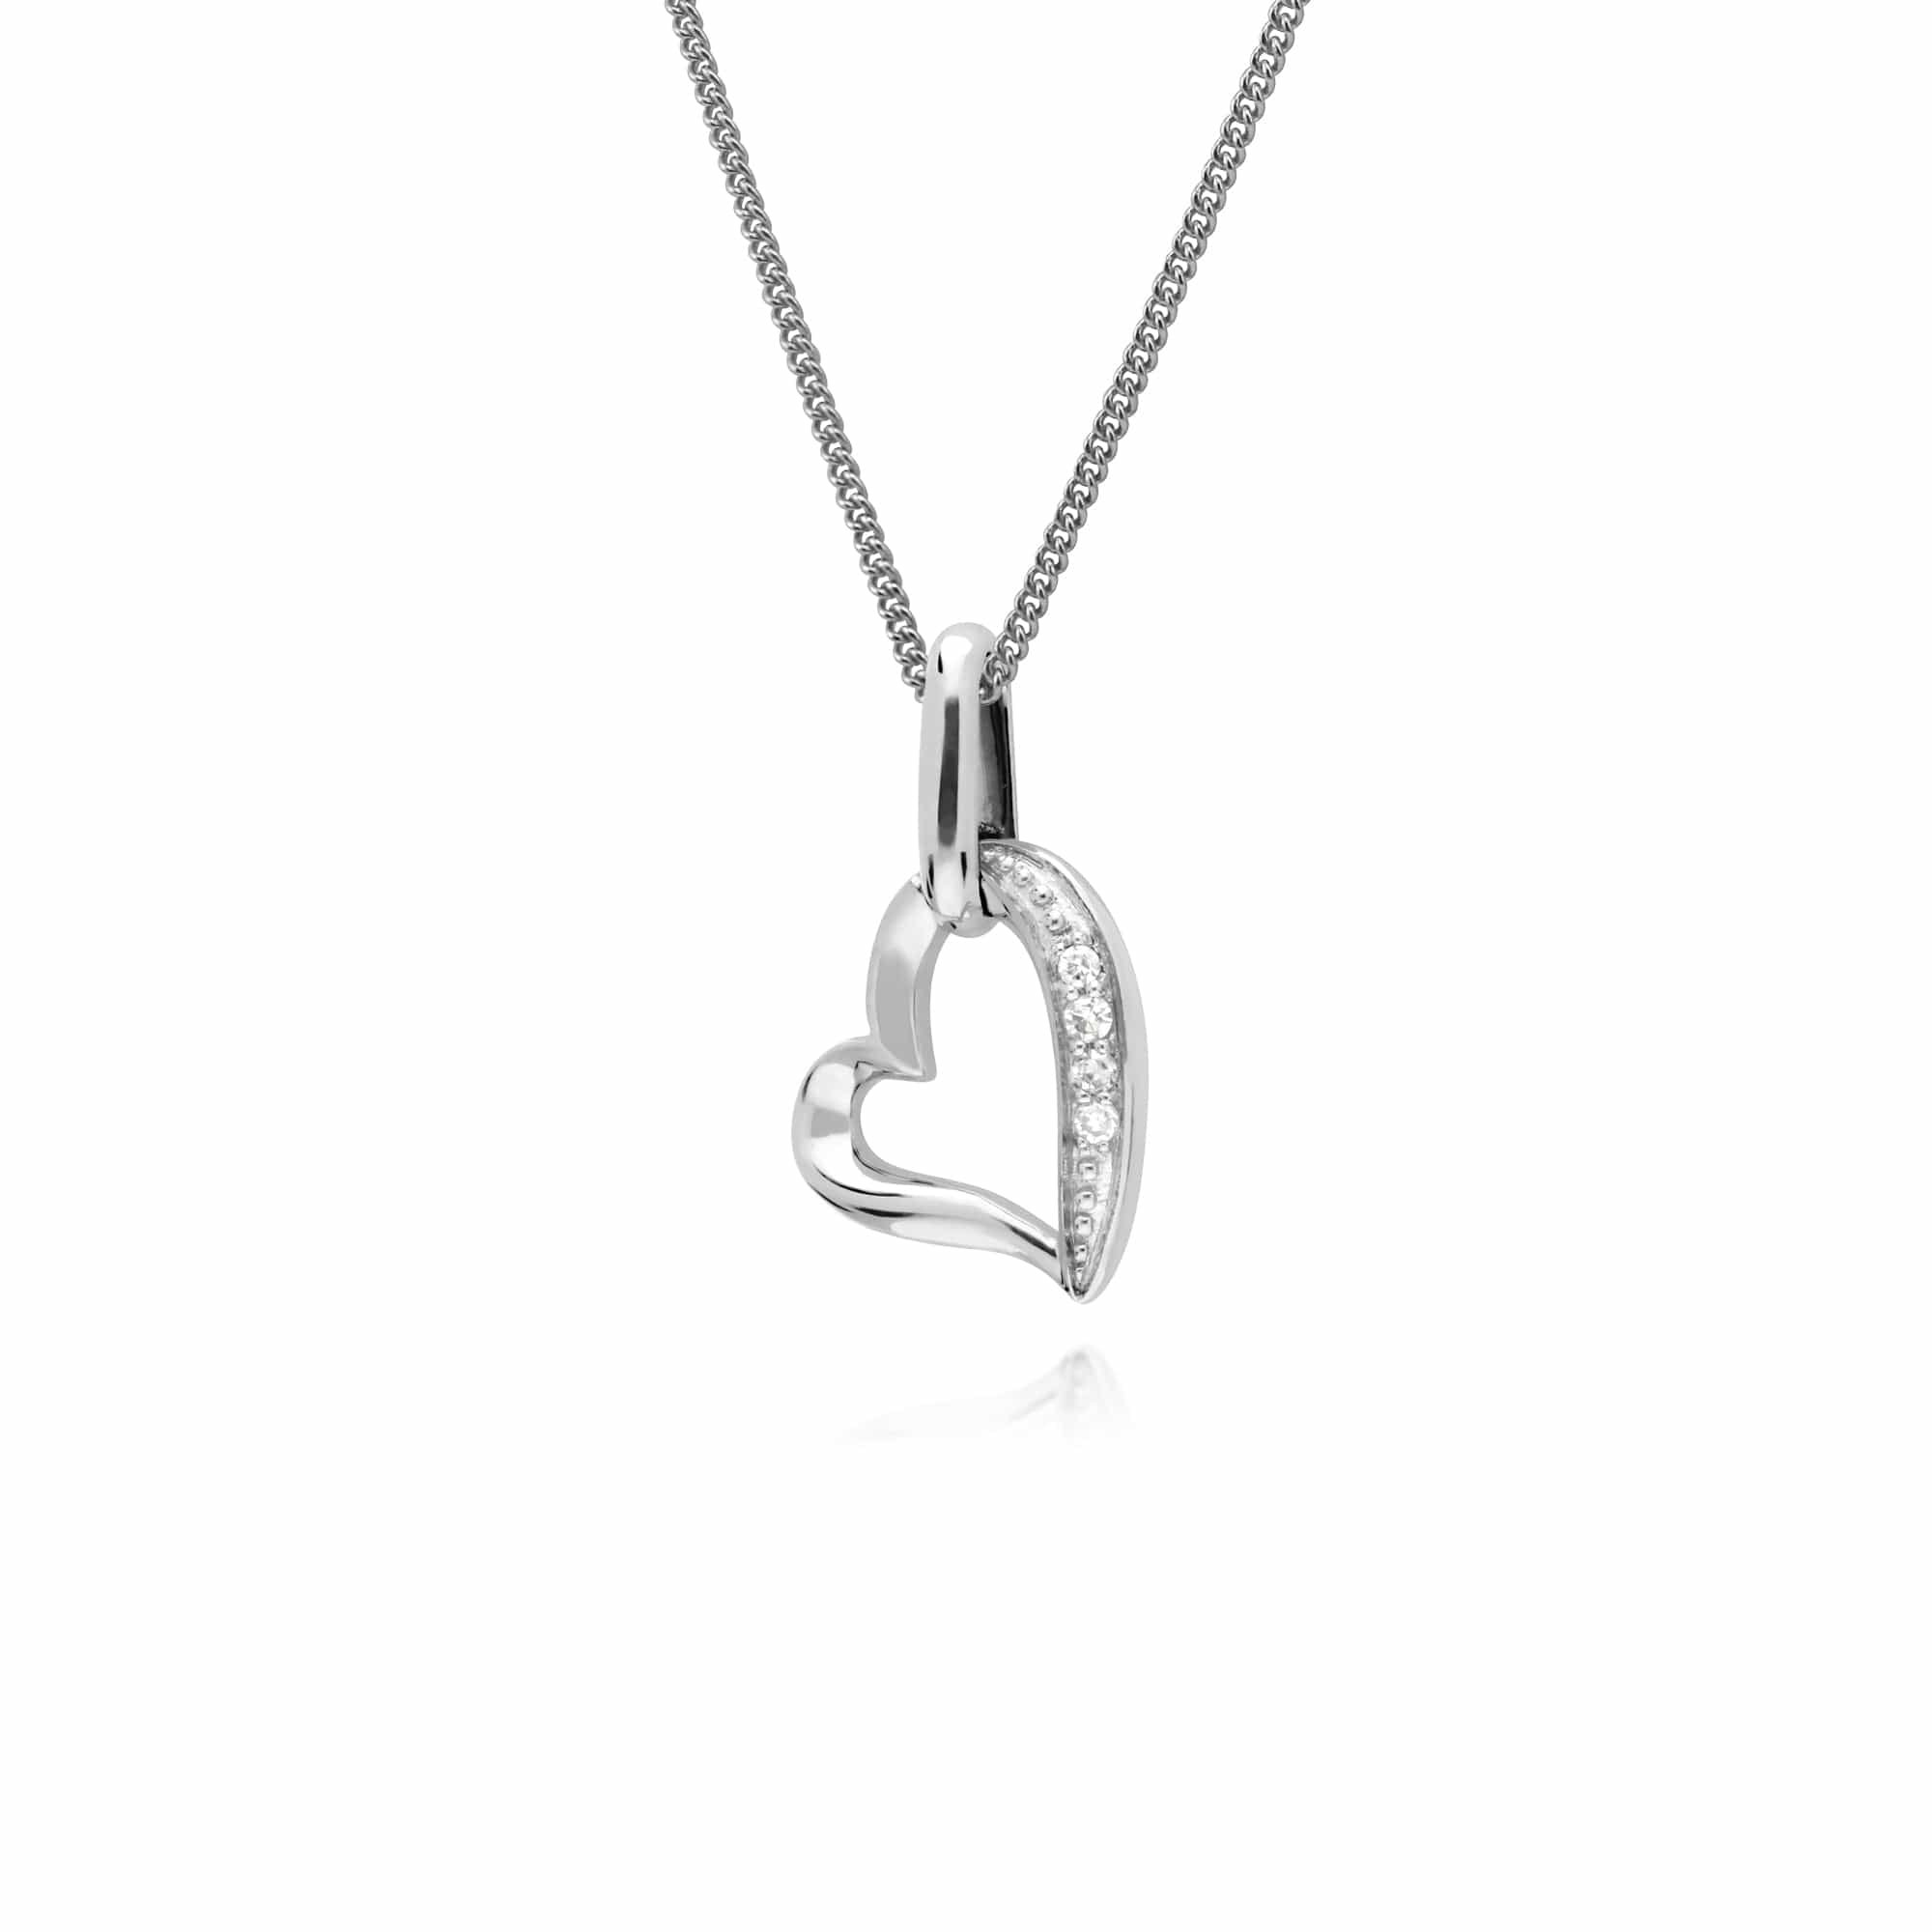 Gemondo 9ct White Gold Diamond Stylish Heart Pendant on 45cm Chain - Gemondo